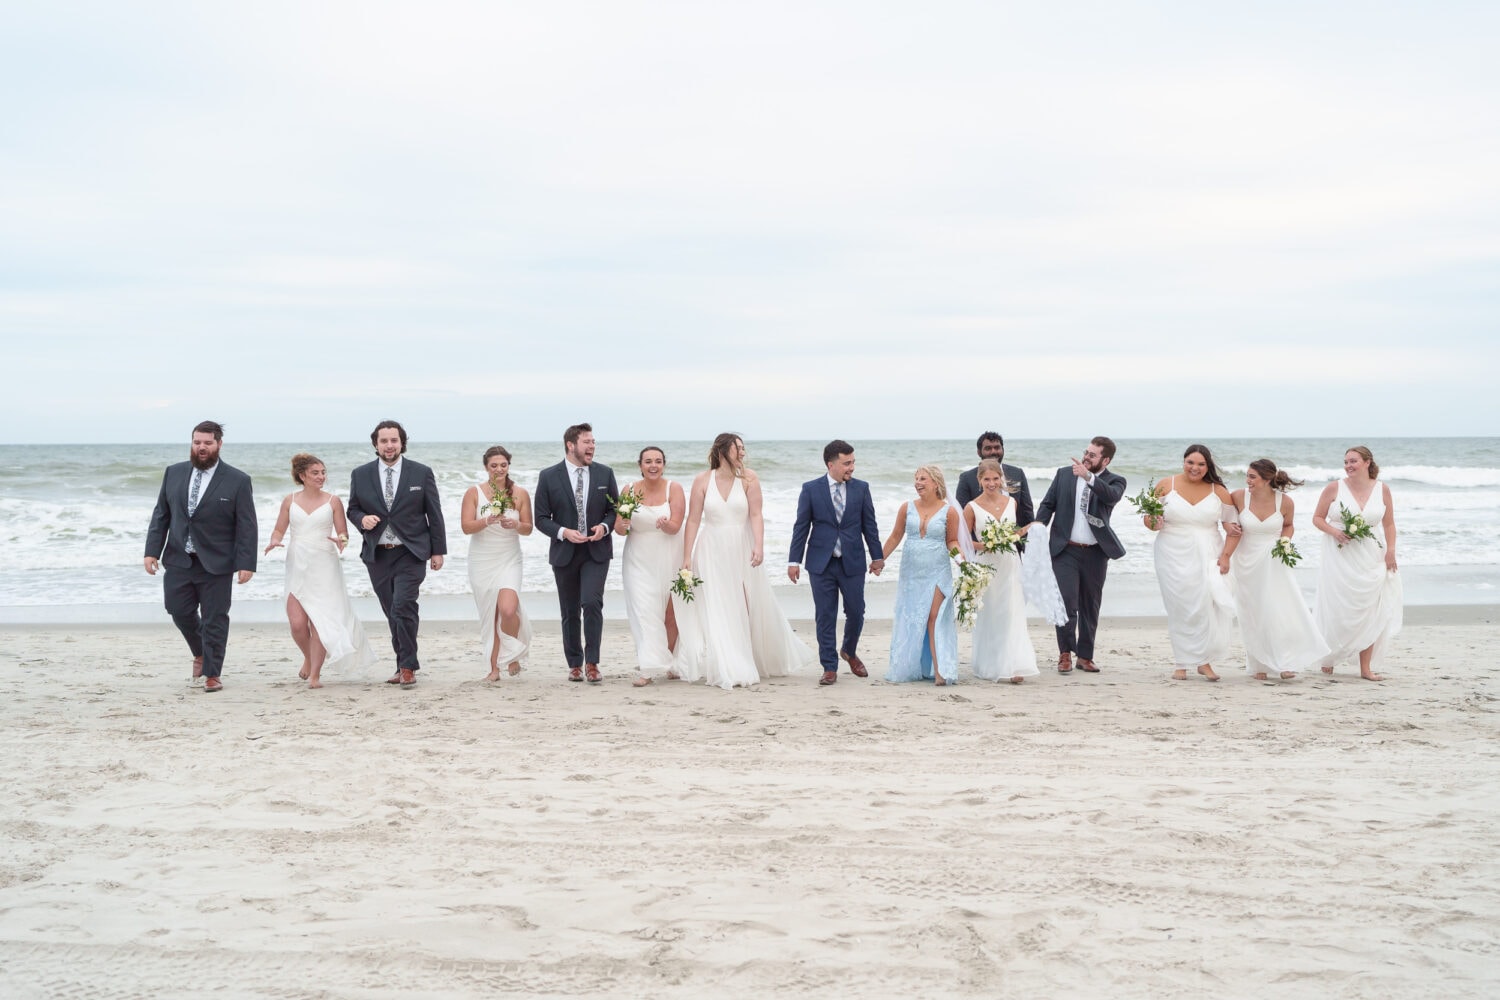 Wedding party walking down the beach together - Hilton Myrtle Beach Resort